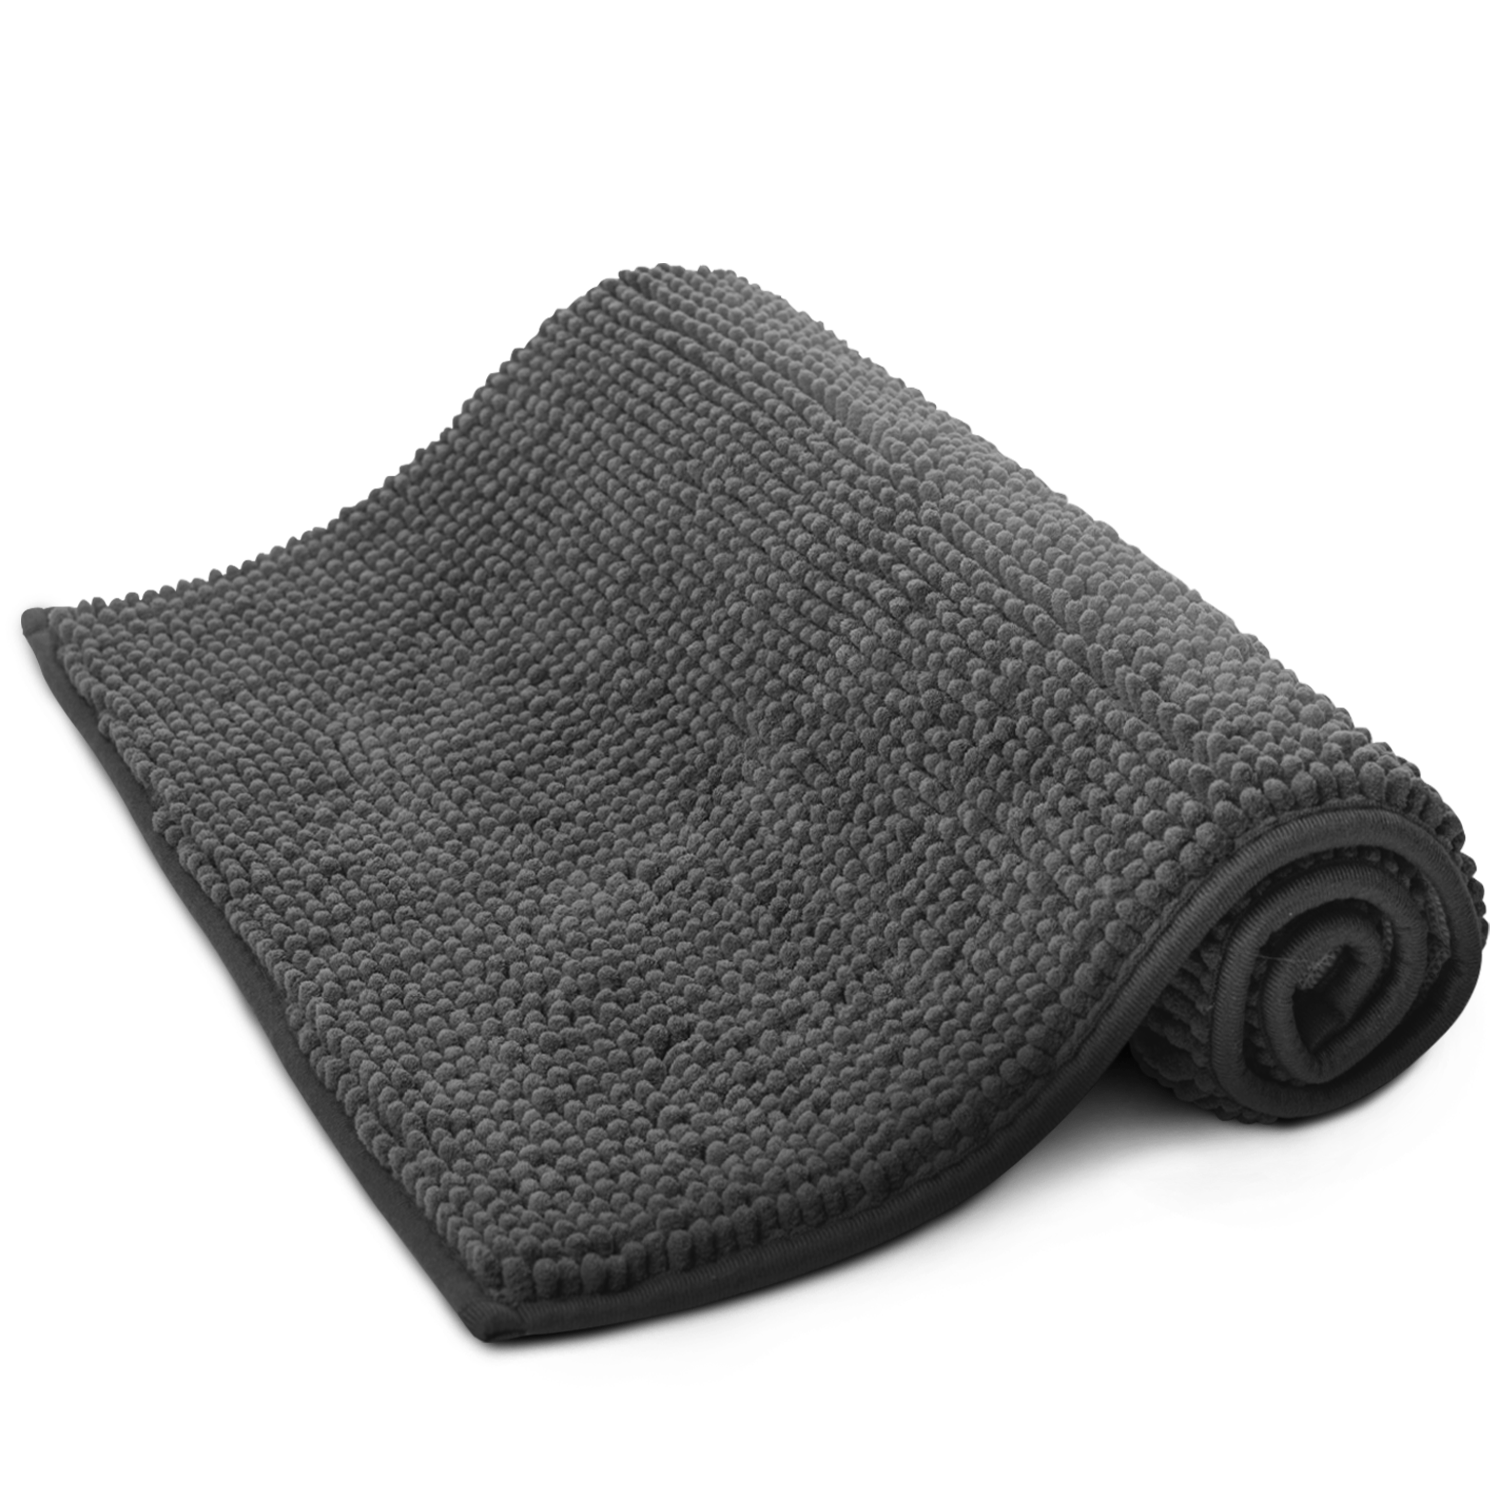 KEPLIN Non-Slip Microfiber Bath Mat - Hygienic & Quick-Drying